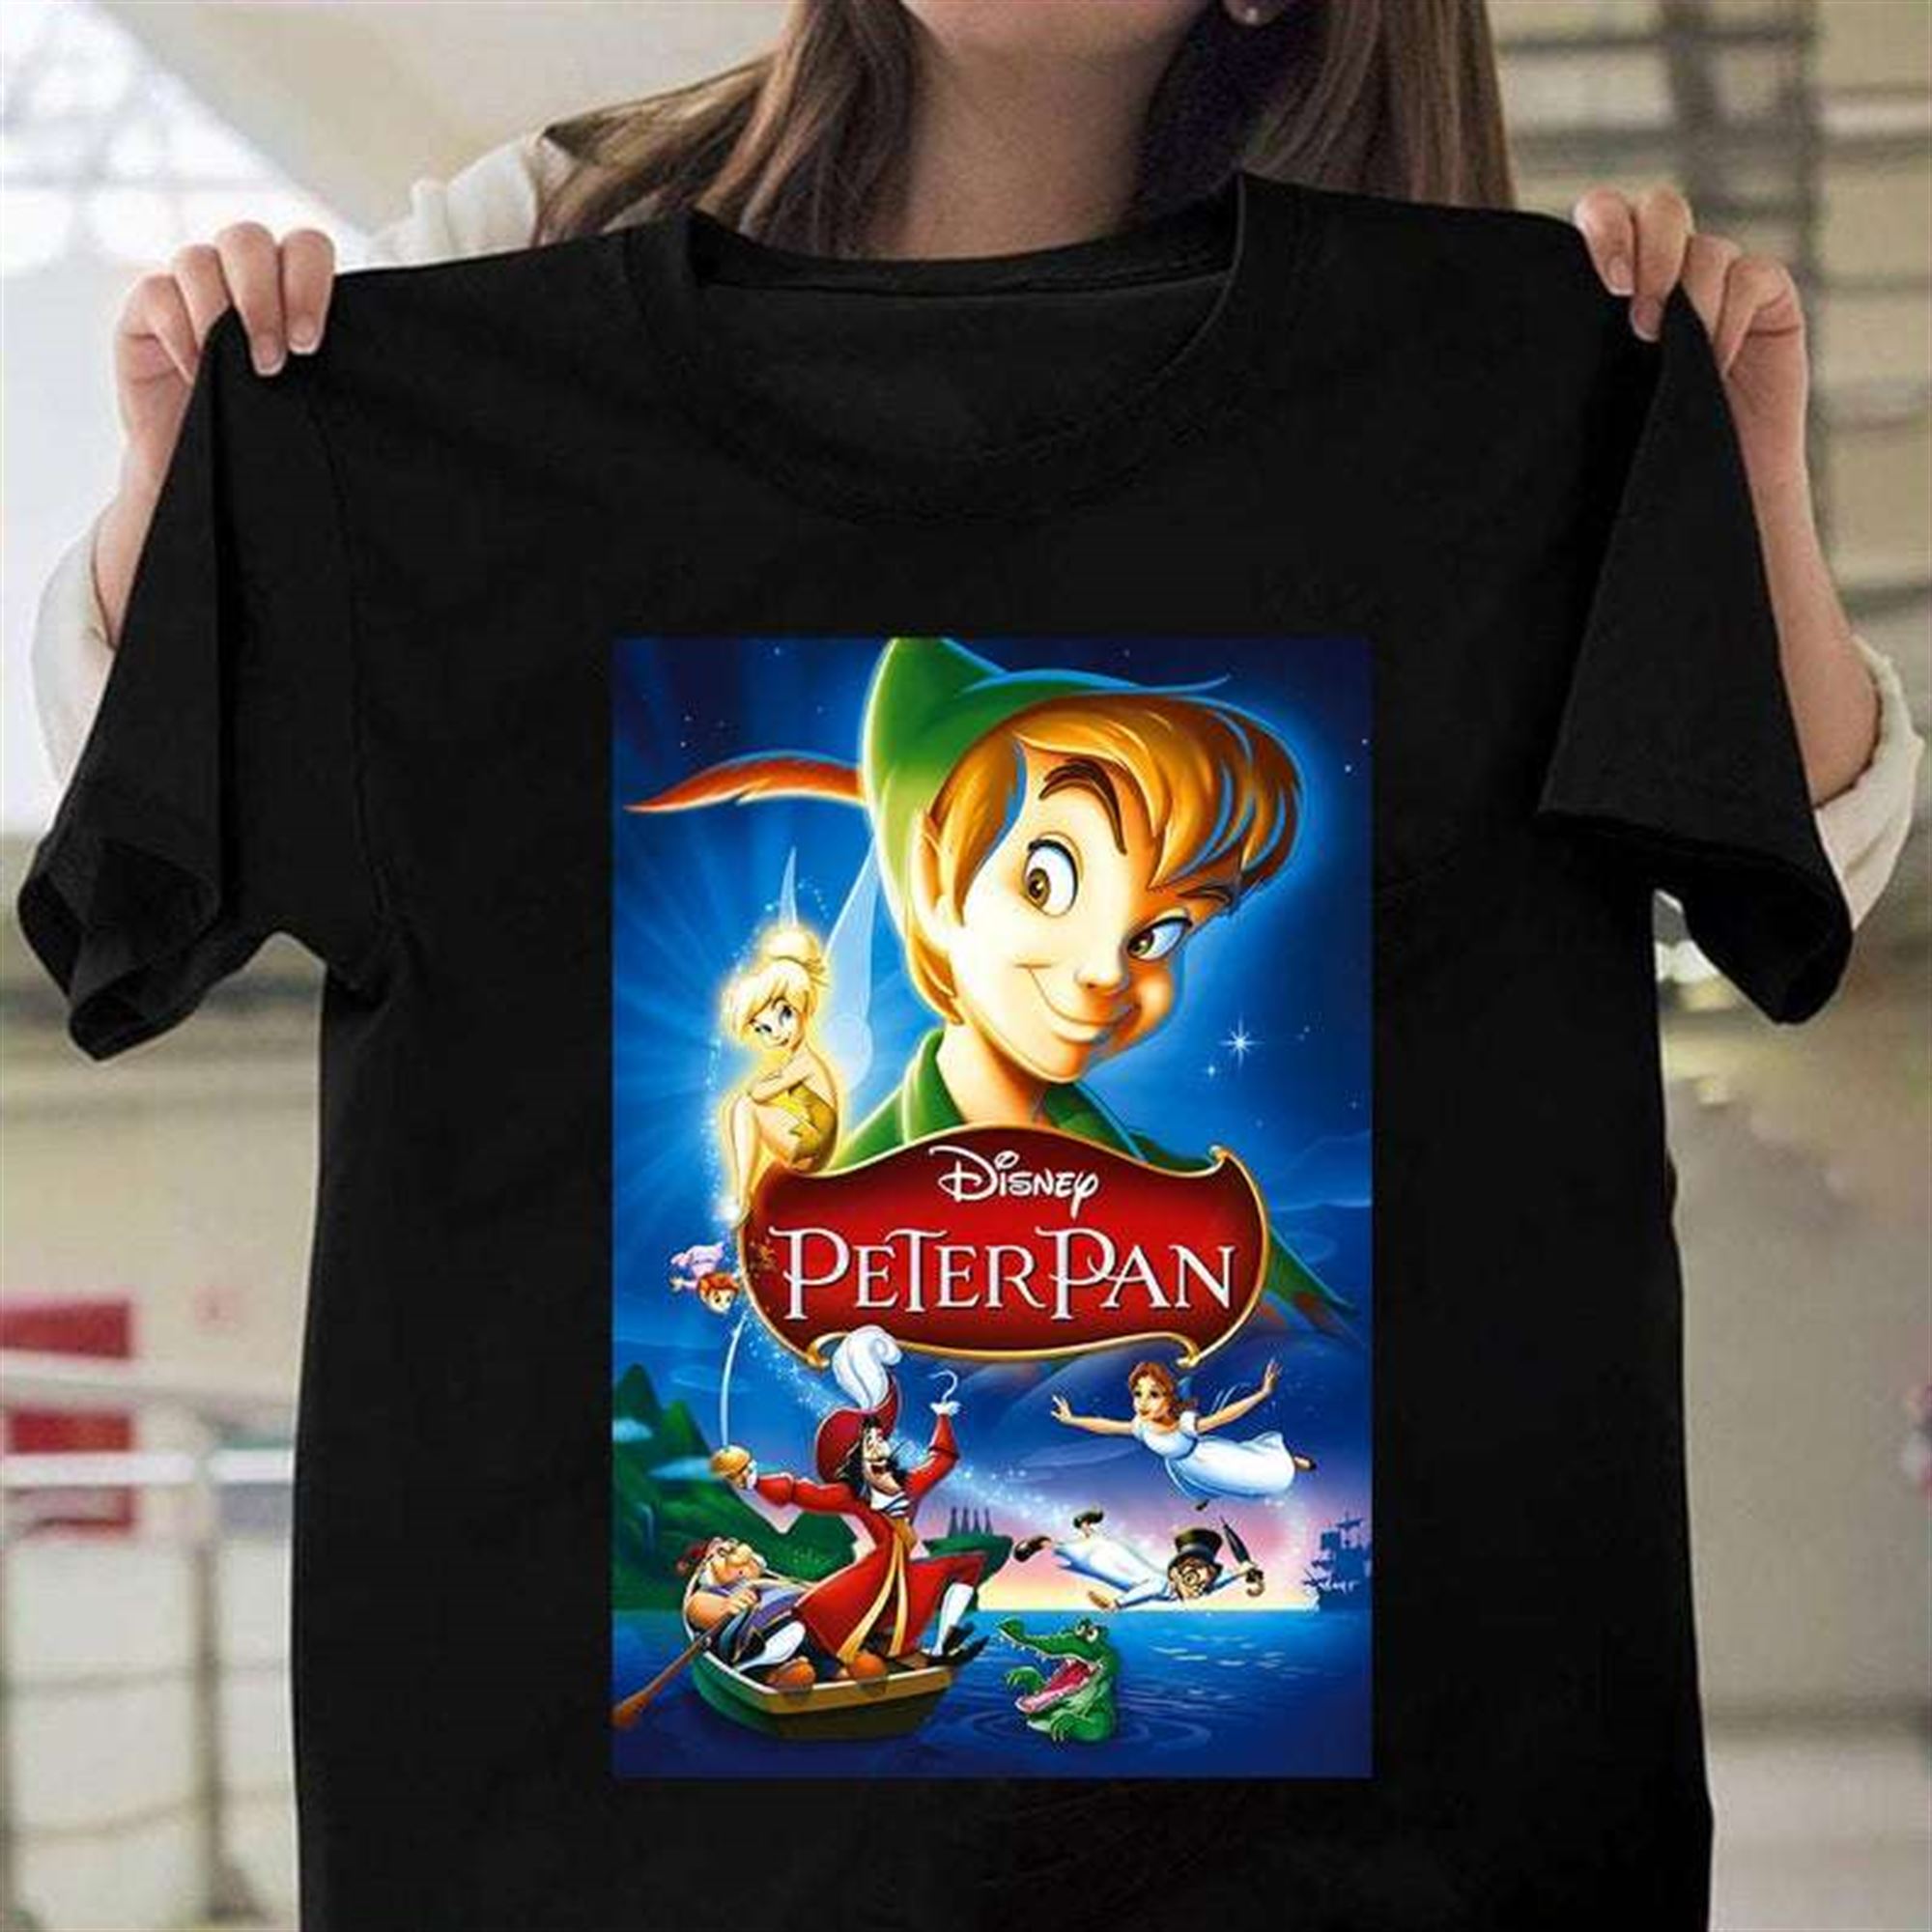 Peterpan Movie Disney T Shirt Size Up To 5xl